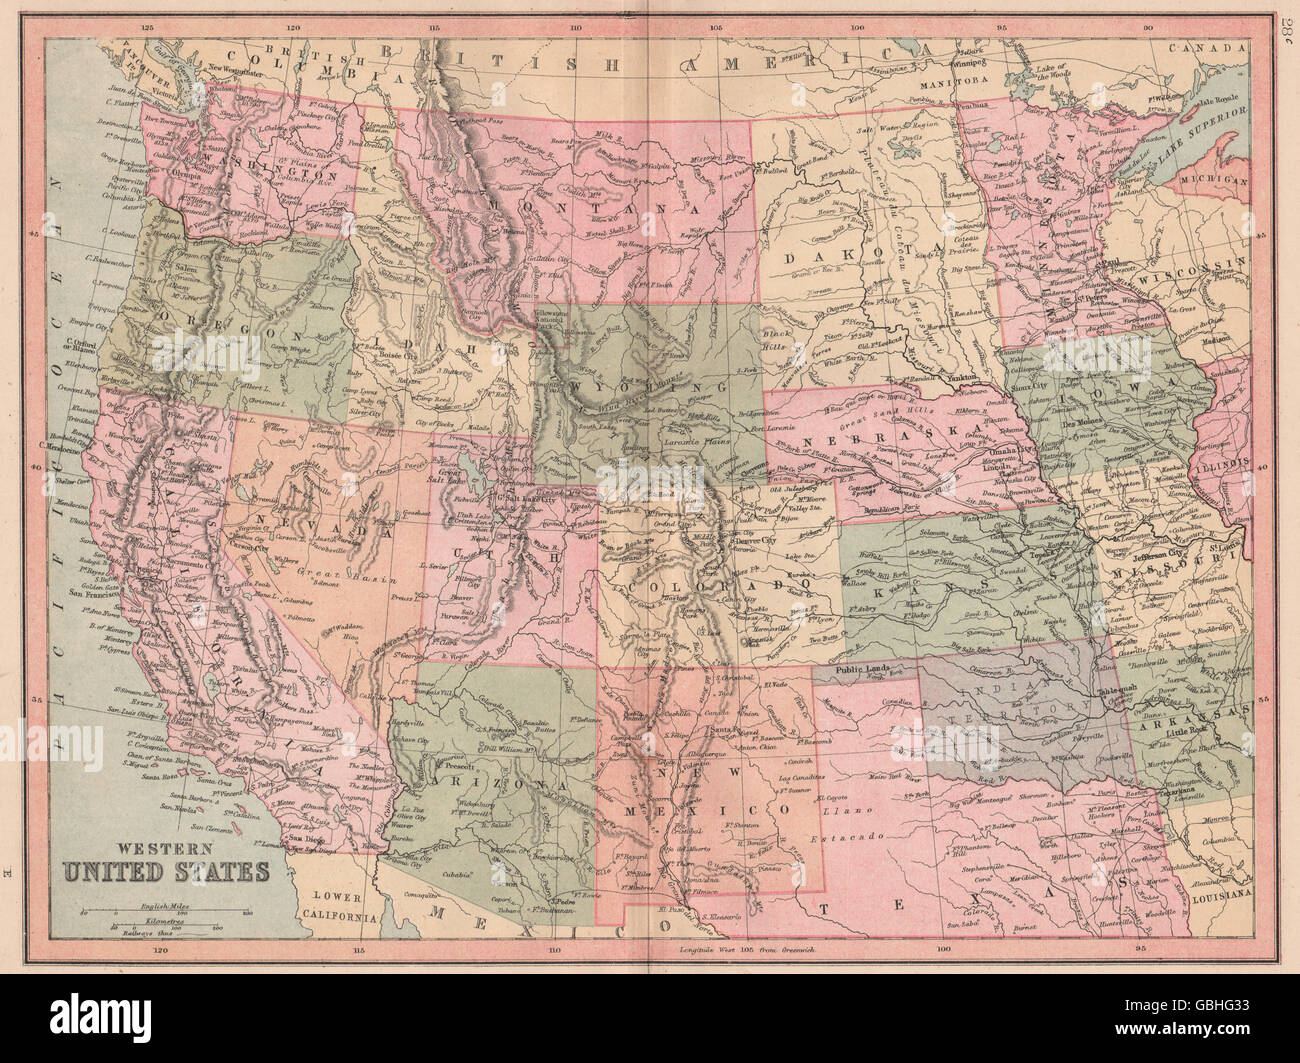 USA WEST: Oklahoma shown as 'Indian Territory', Dakotas as one state, 1880 map Stock Photo